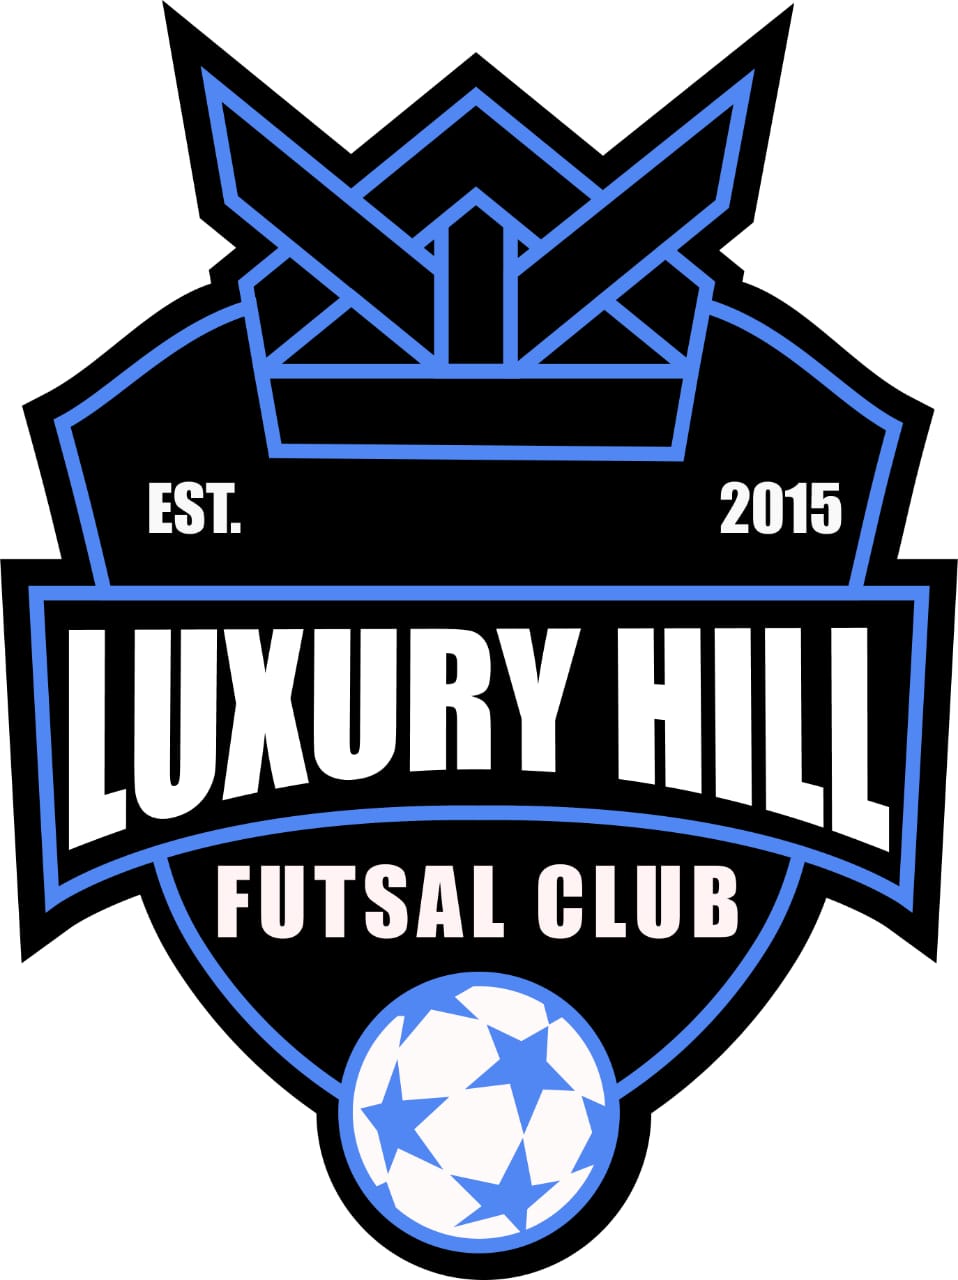 Luxury Hill FC